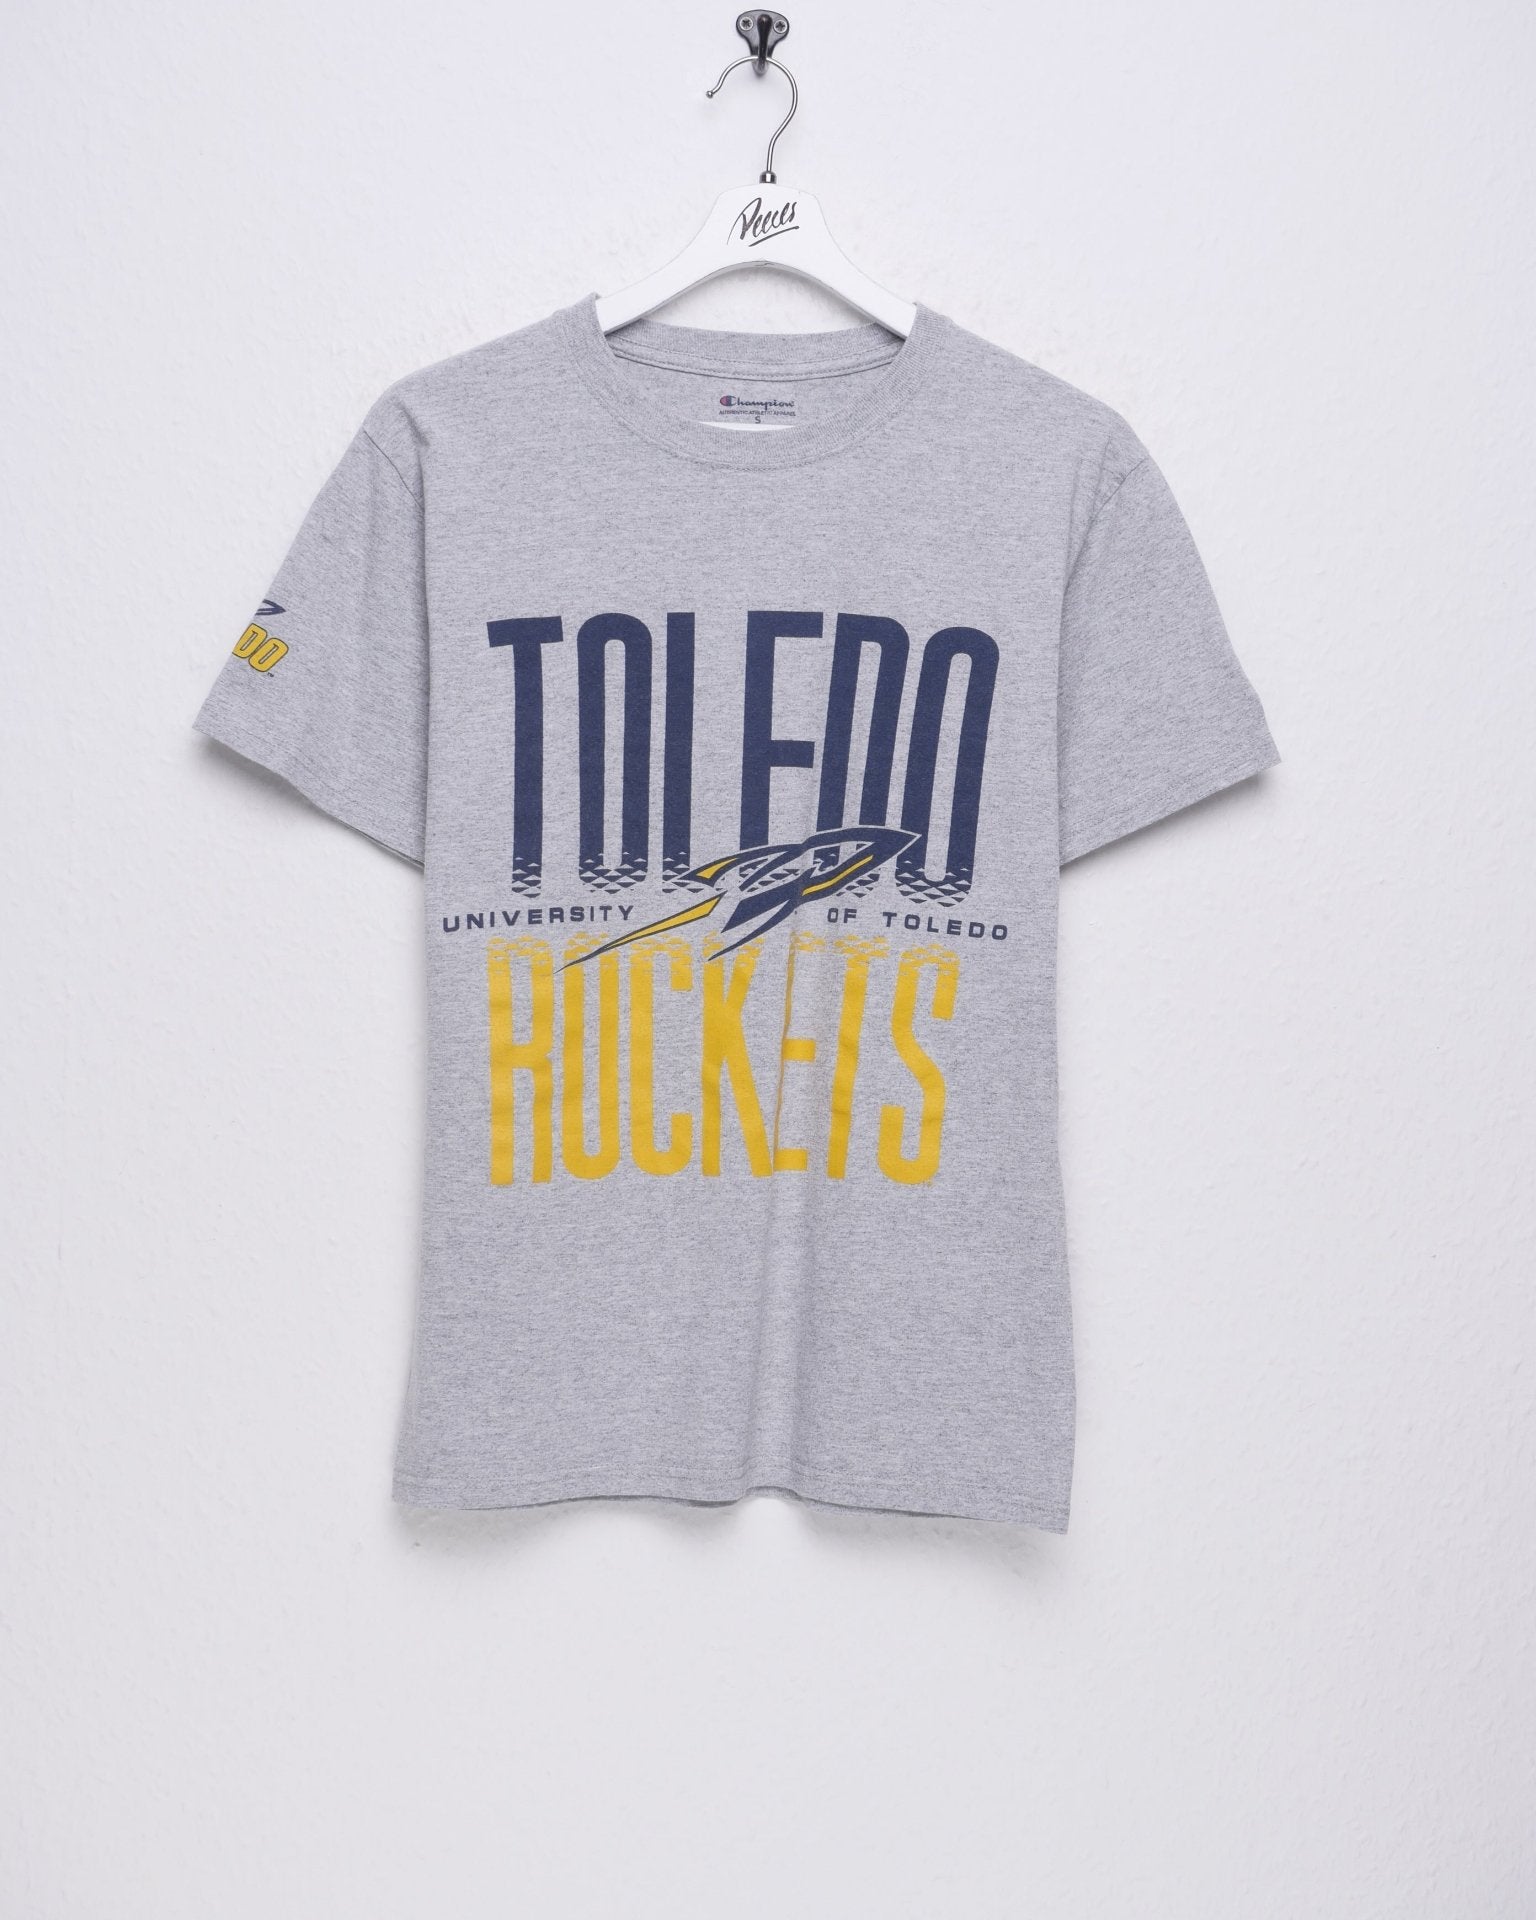 Champion University of Toledo embroidered Logo Shirt - Peeces